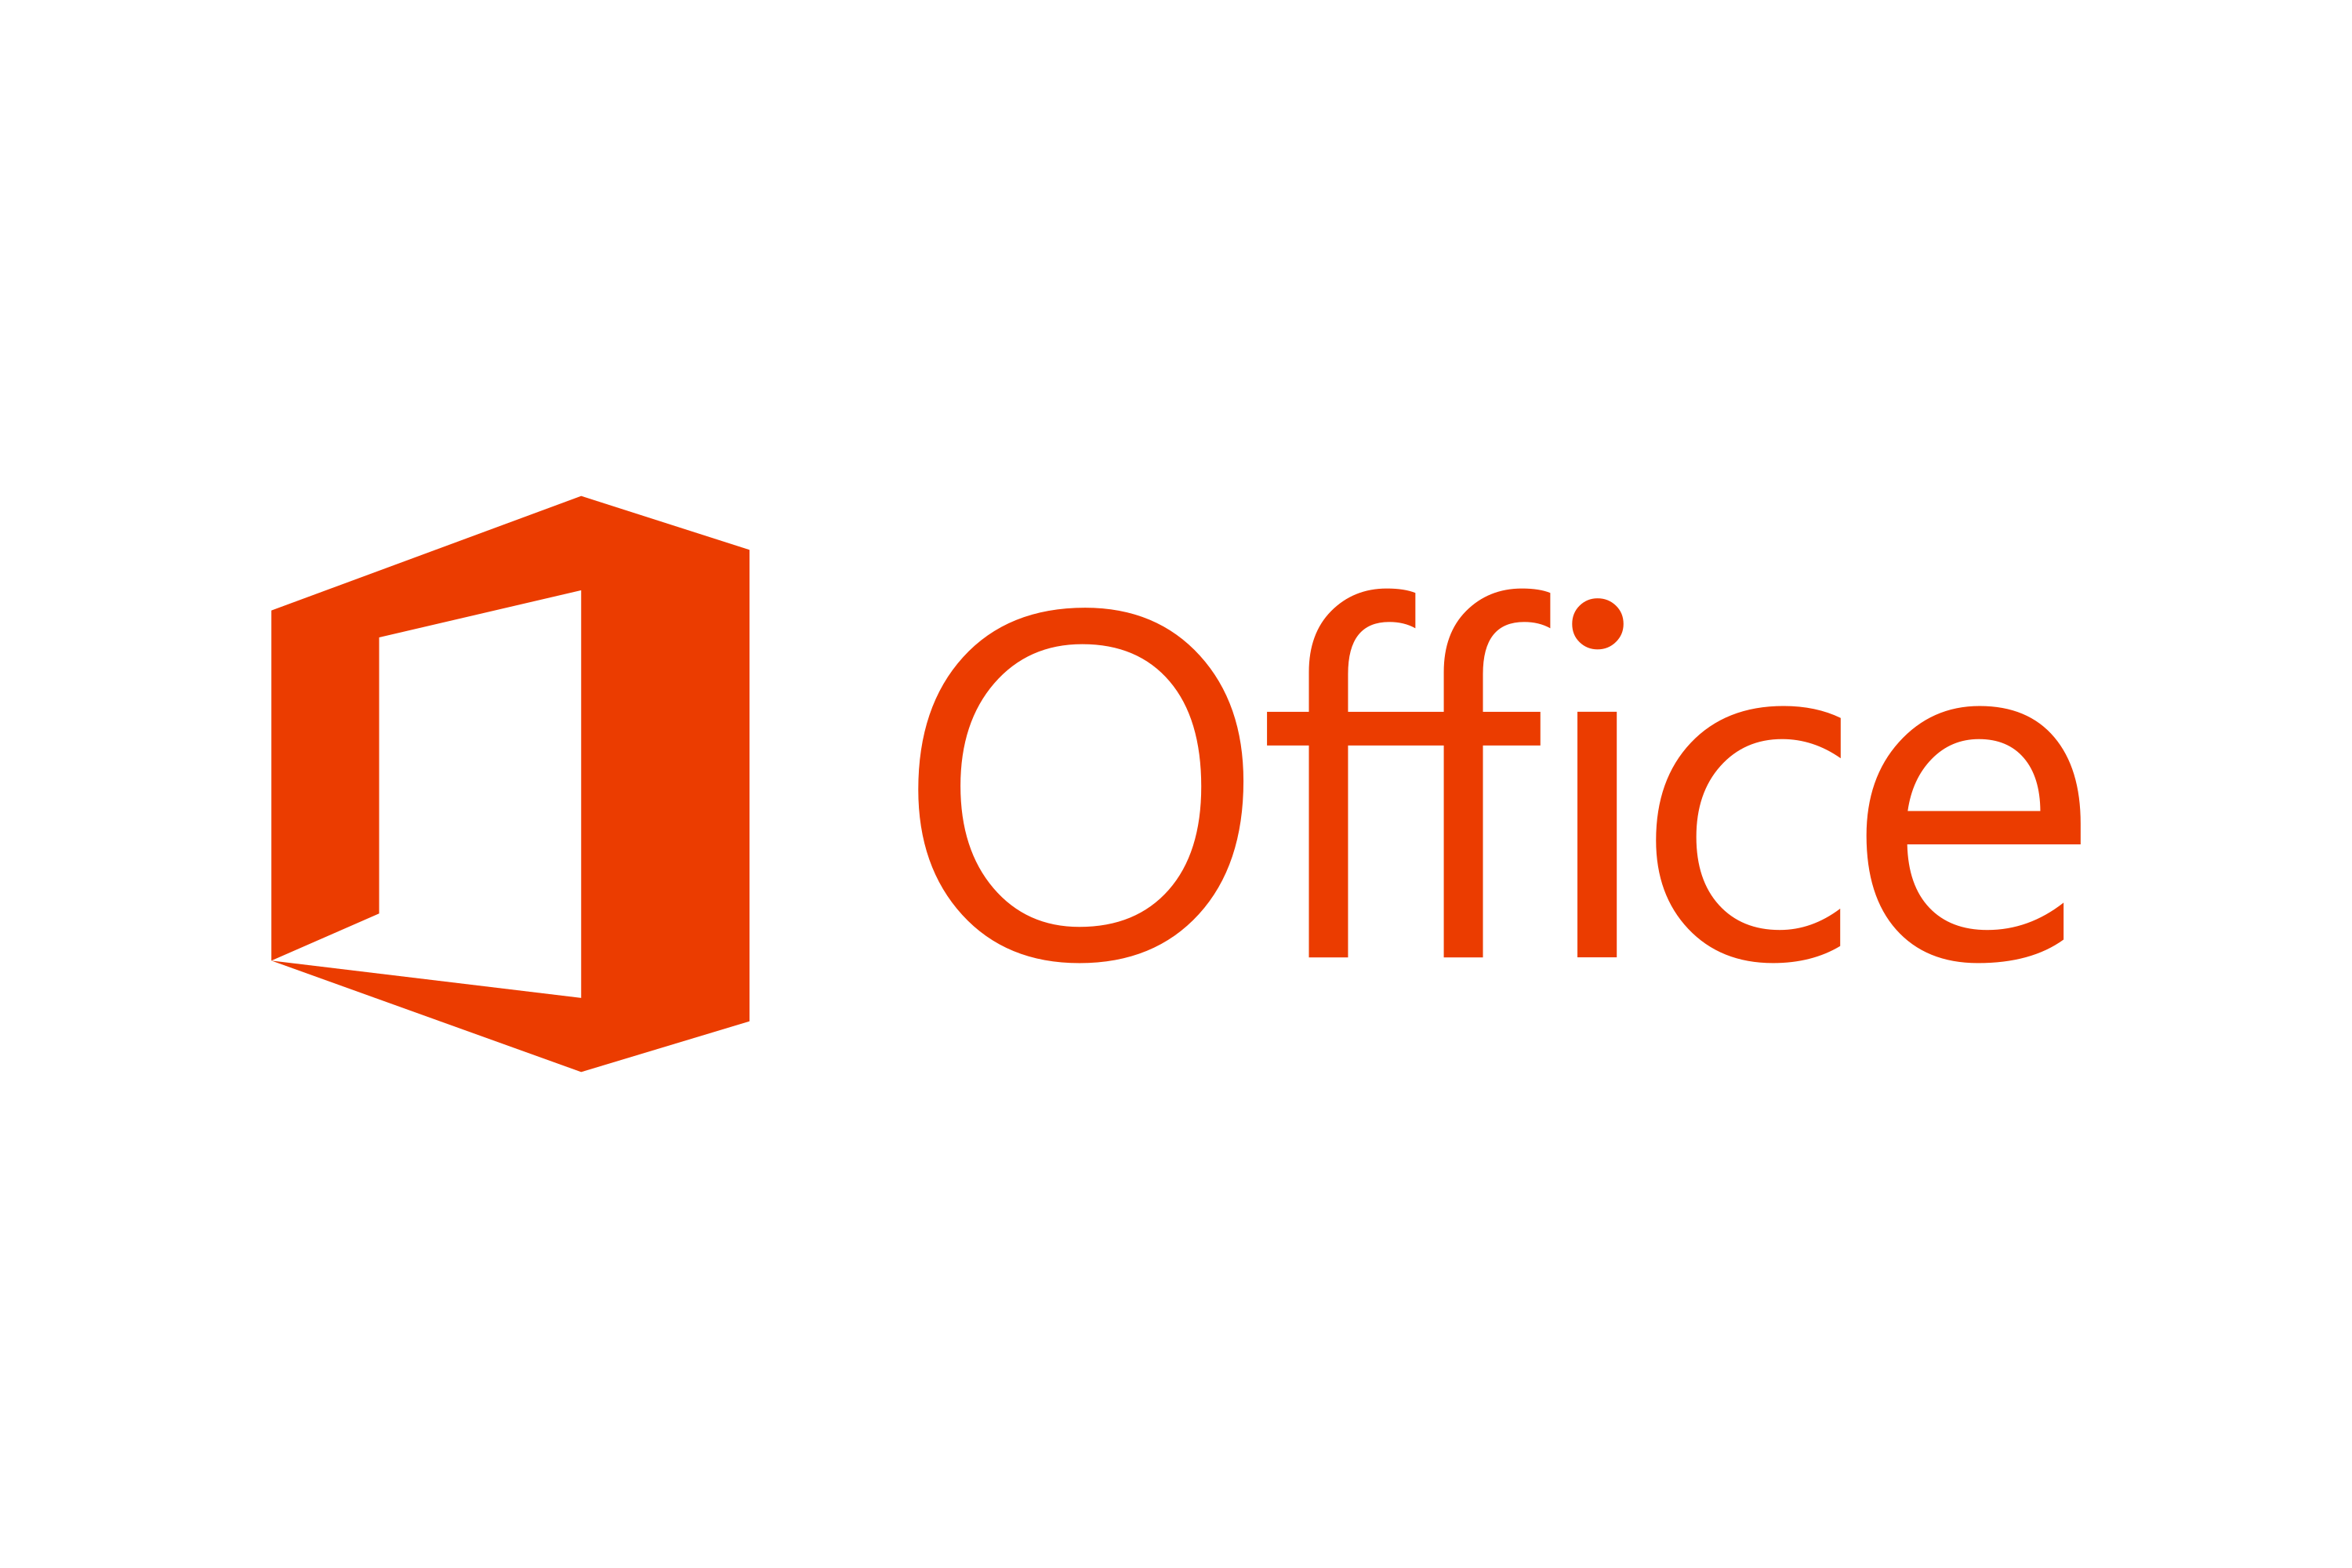 Download Office Online (Office Web Apps) Logo in SVG Vector or PNG File  Format 